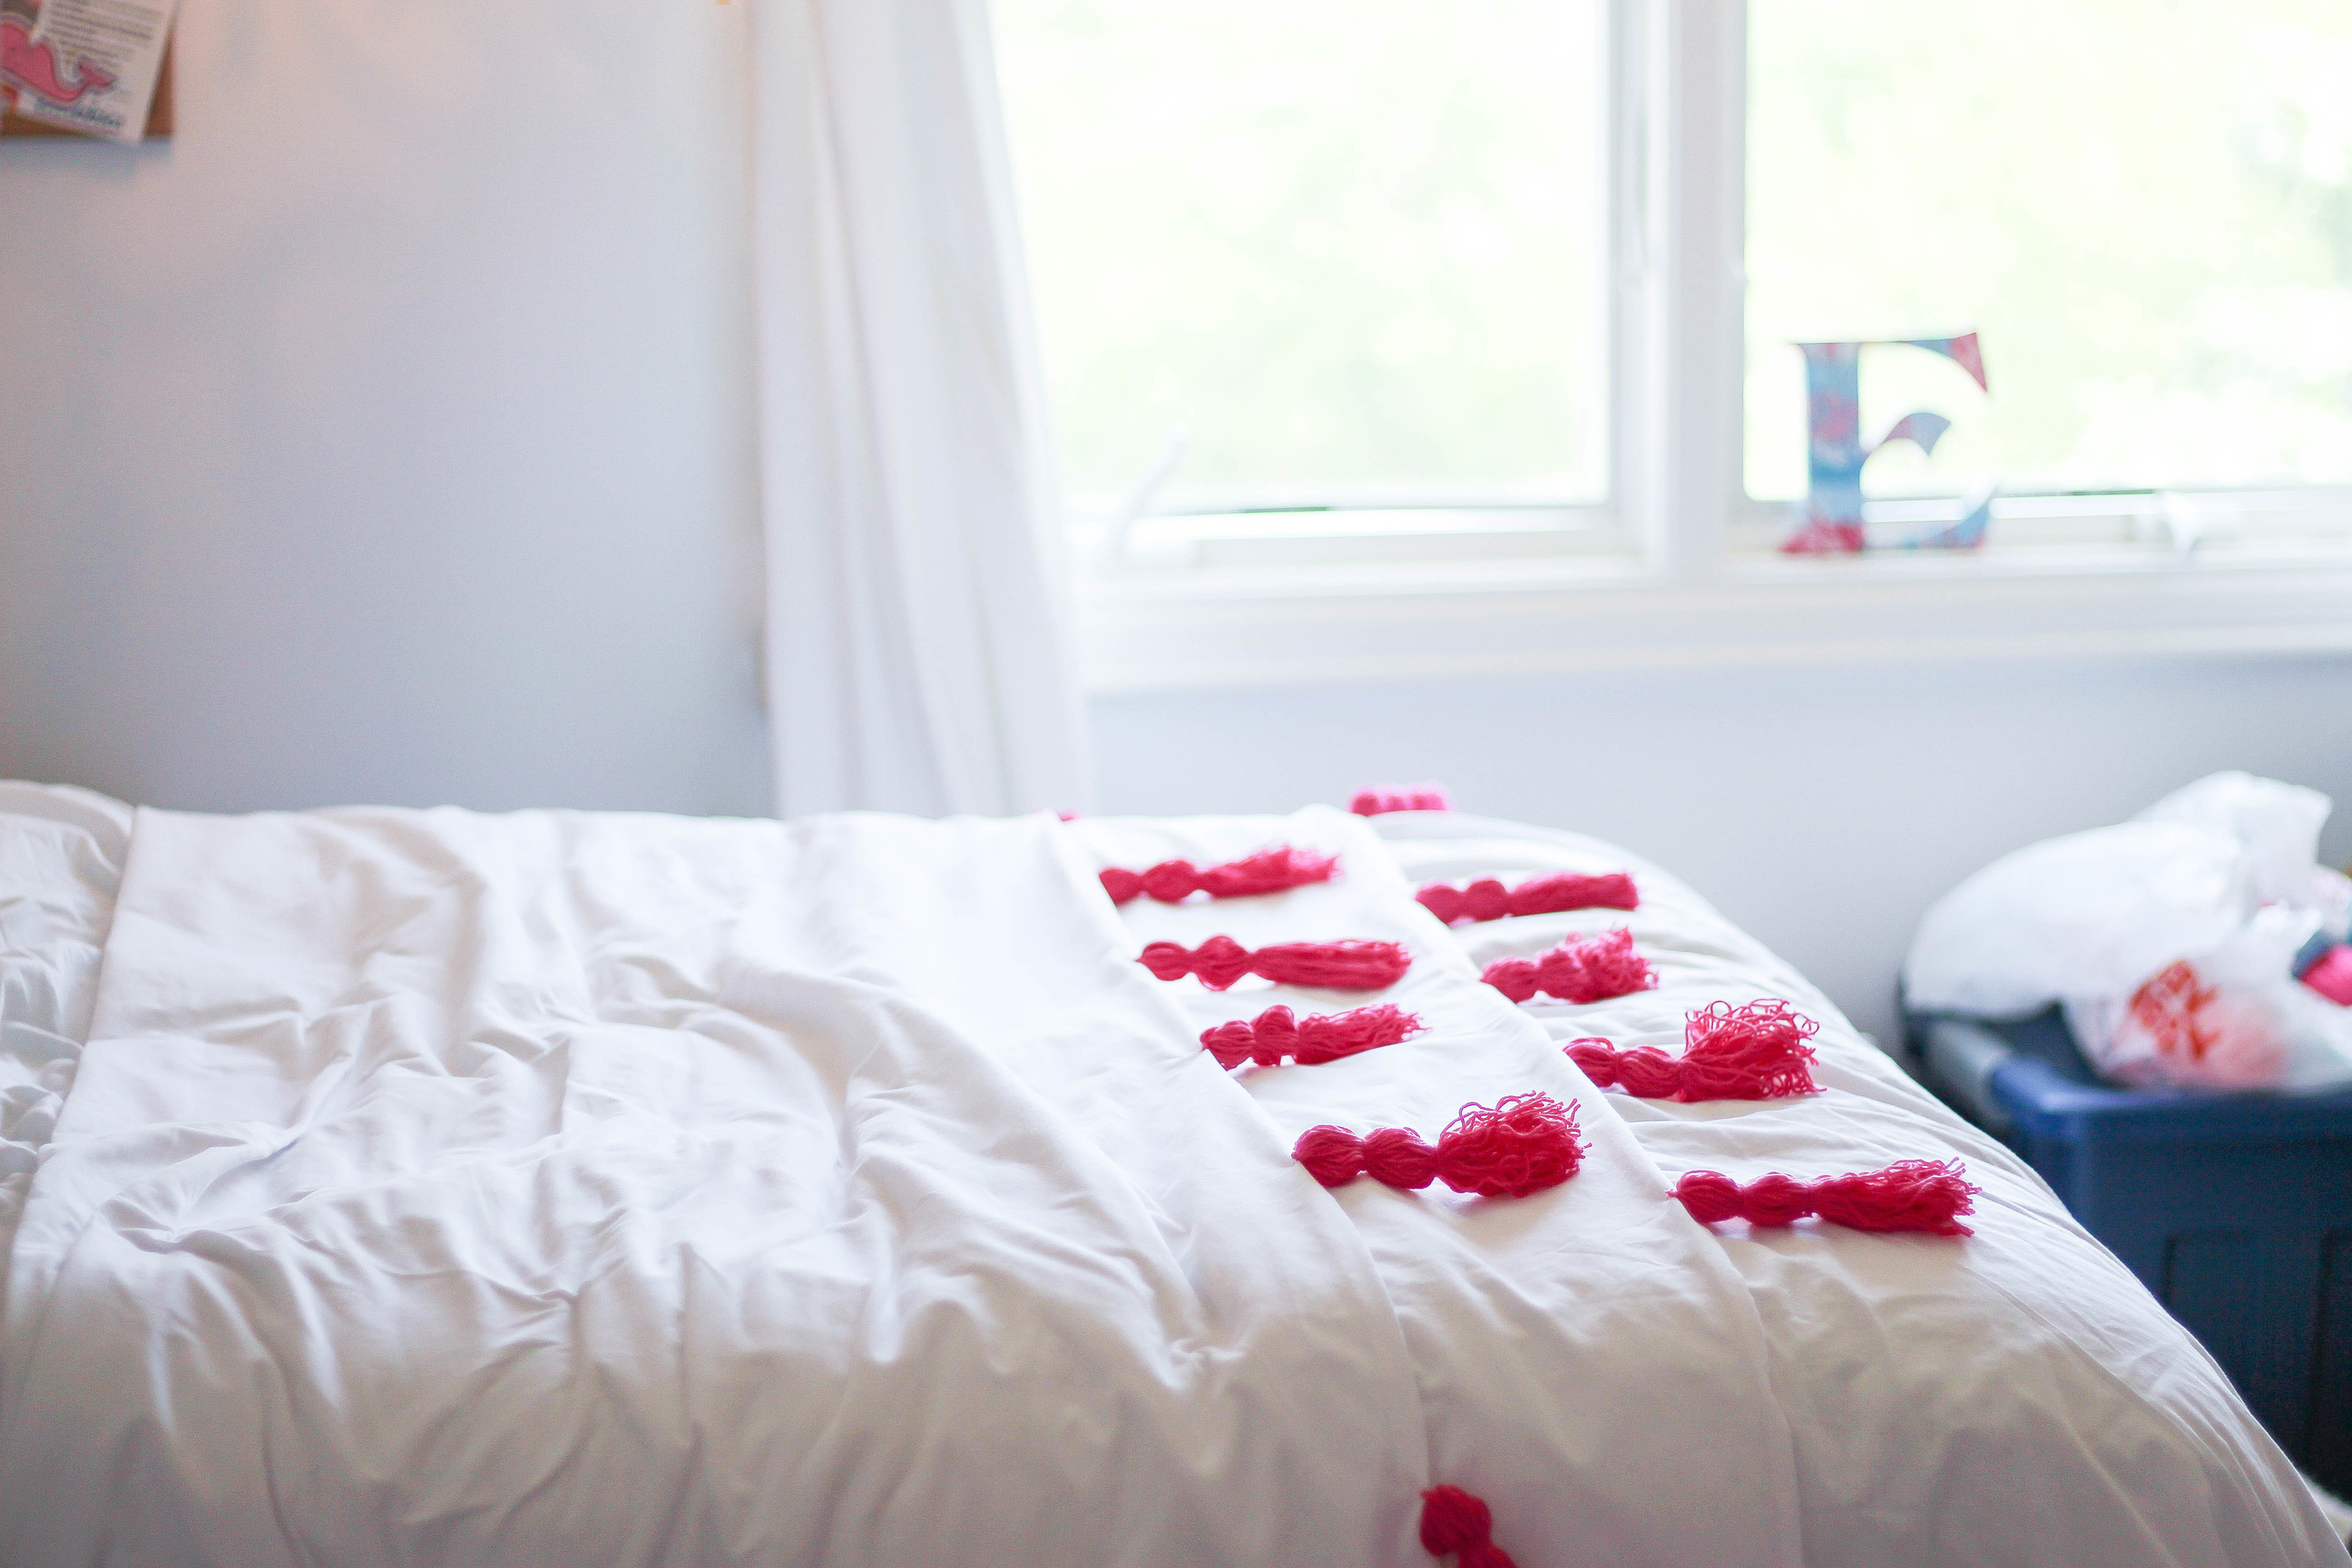 DIY Tassel bedding and crafts Tassel decor for dorm room by lauren lindmark on daily dose of charm